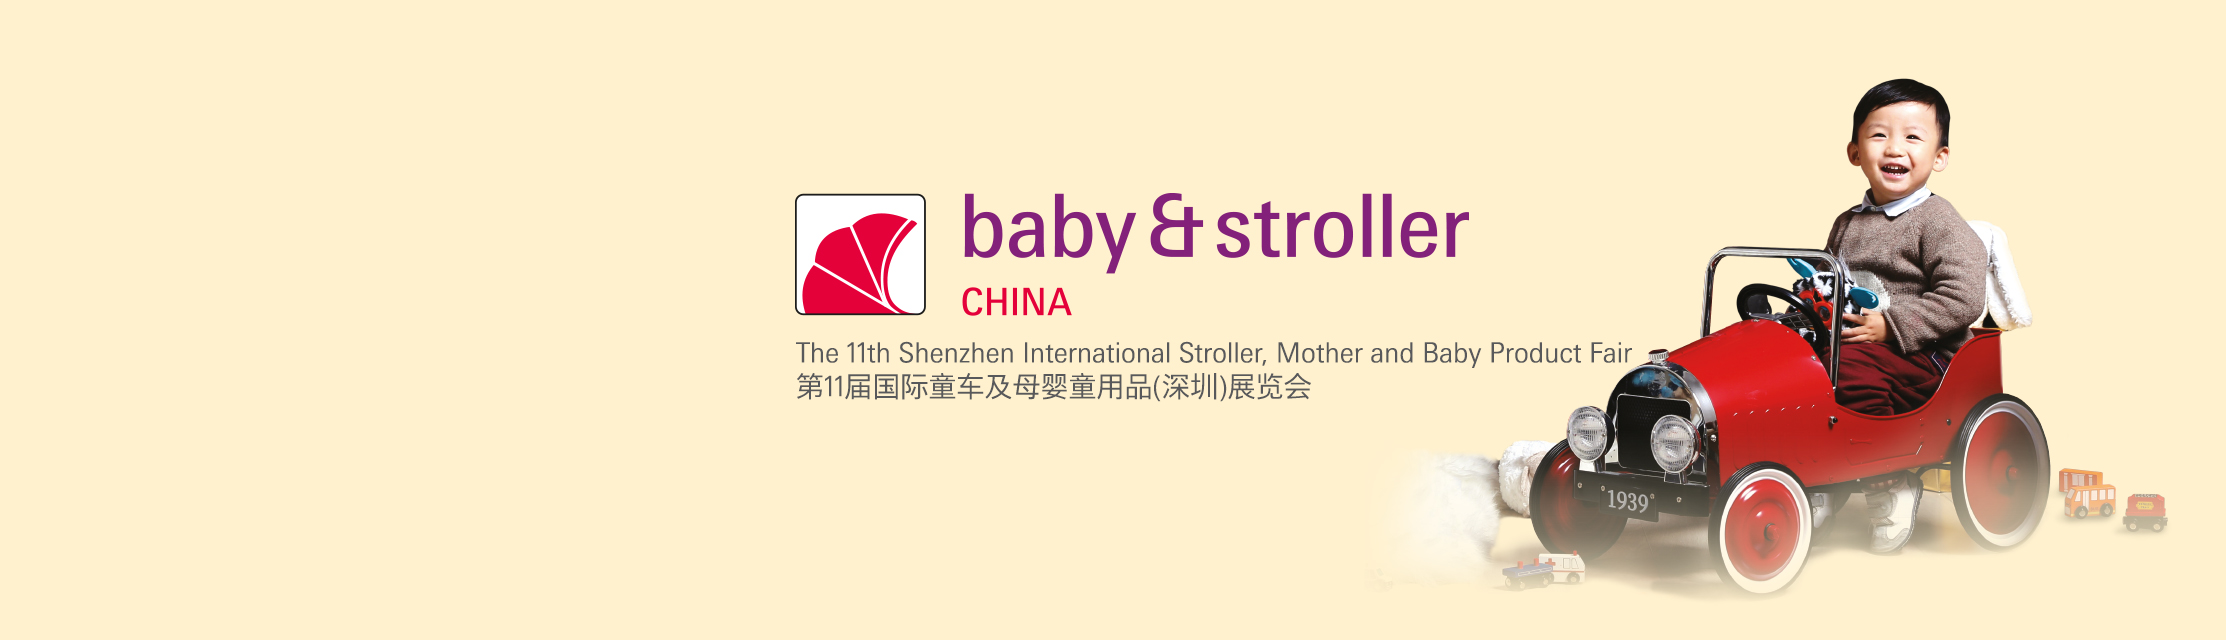 chinese stroller brands